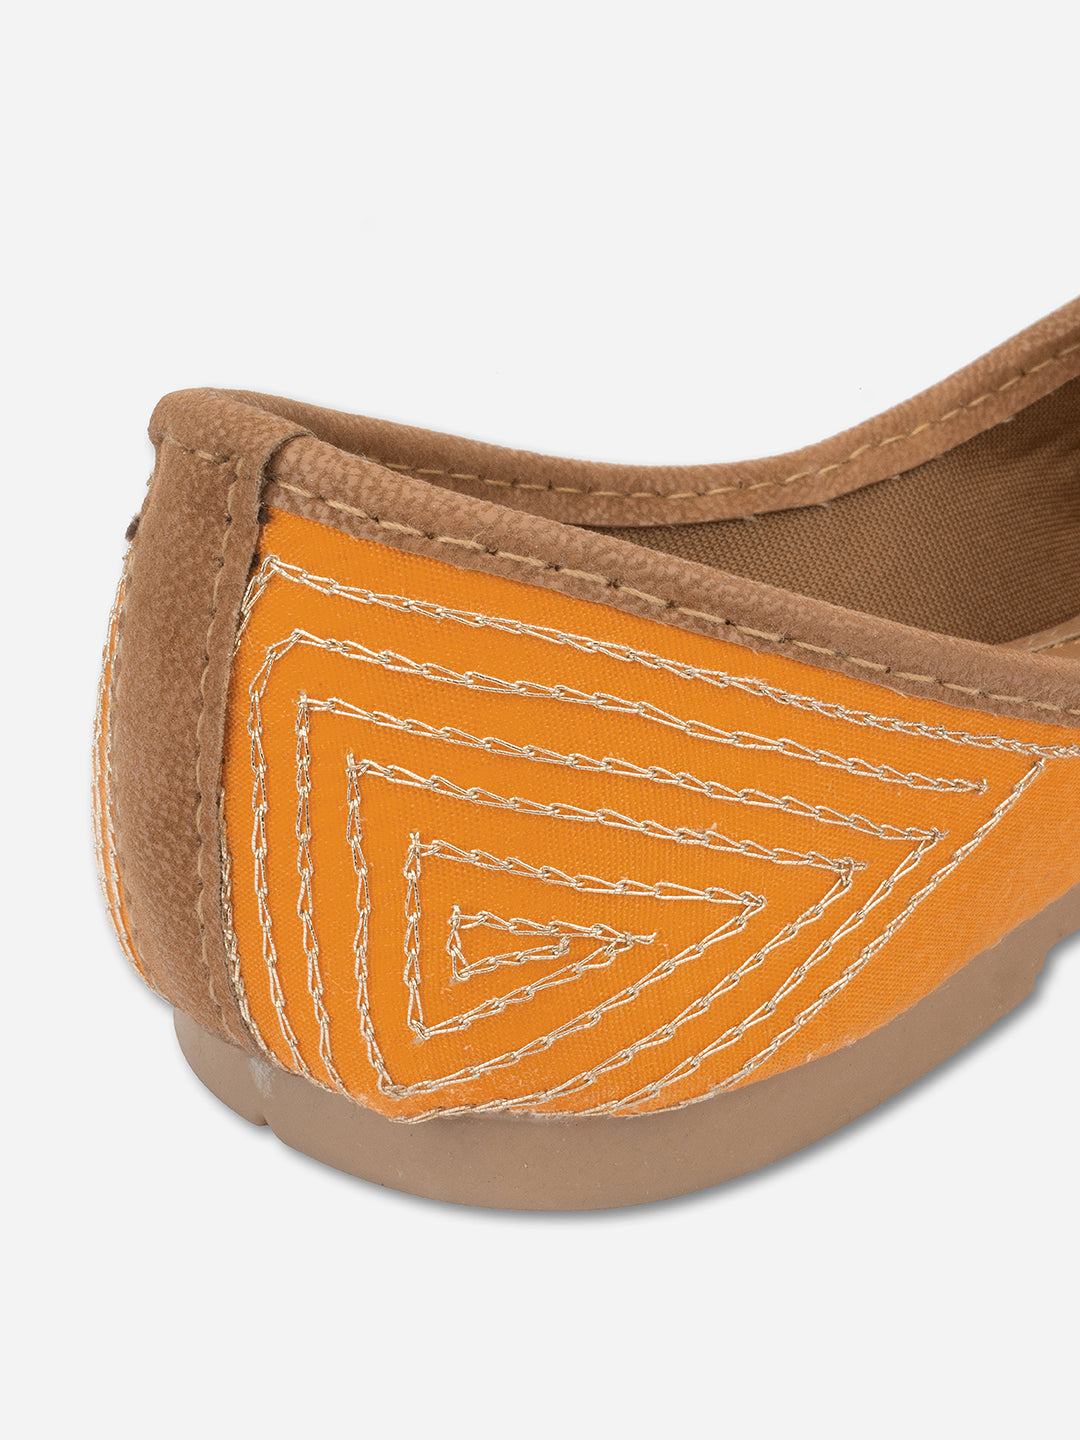 DESI COLOUR Women Orange Embellished Leather Ethnic Mojaris Flats